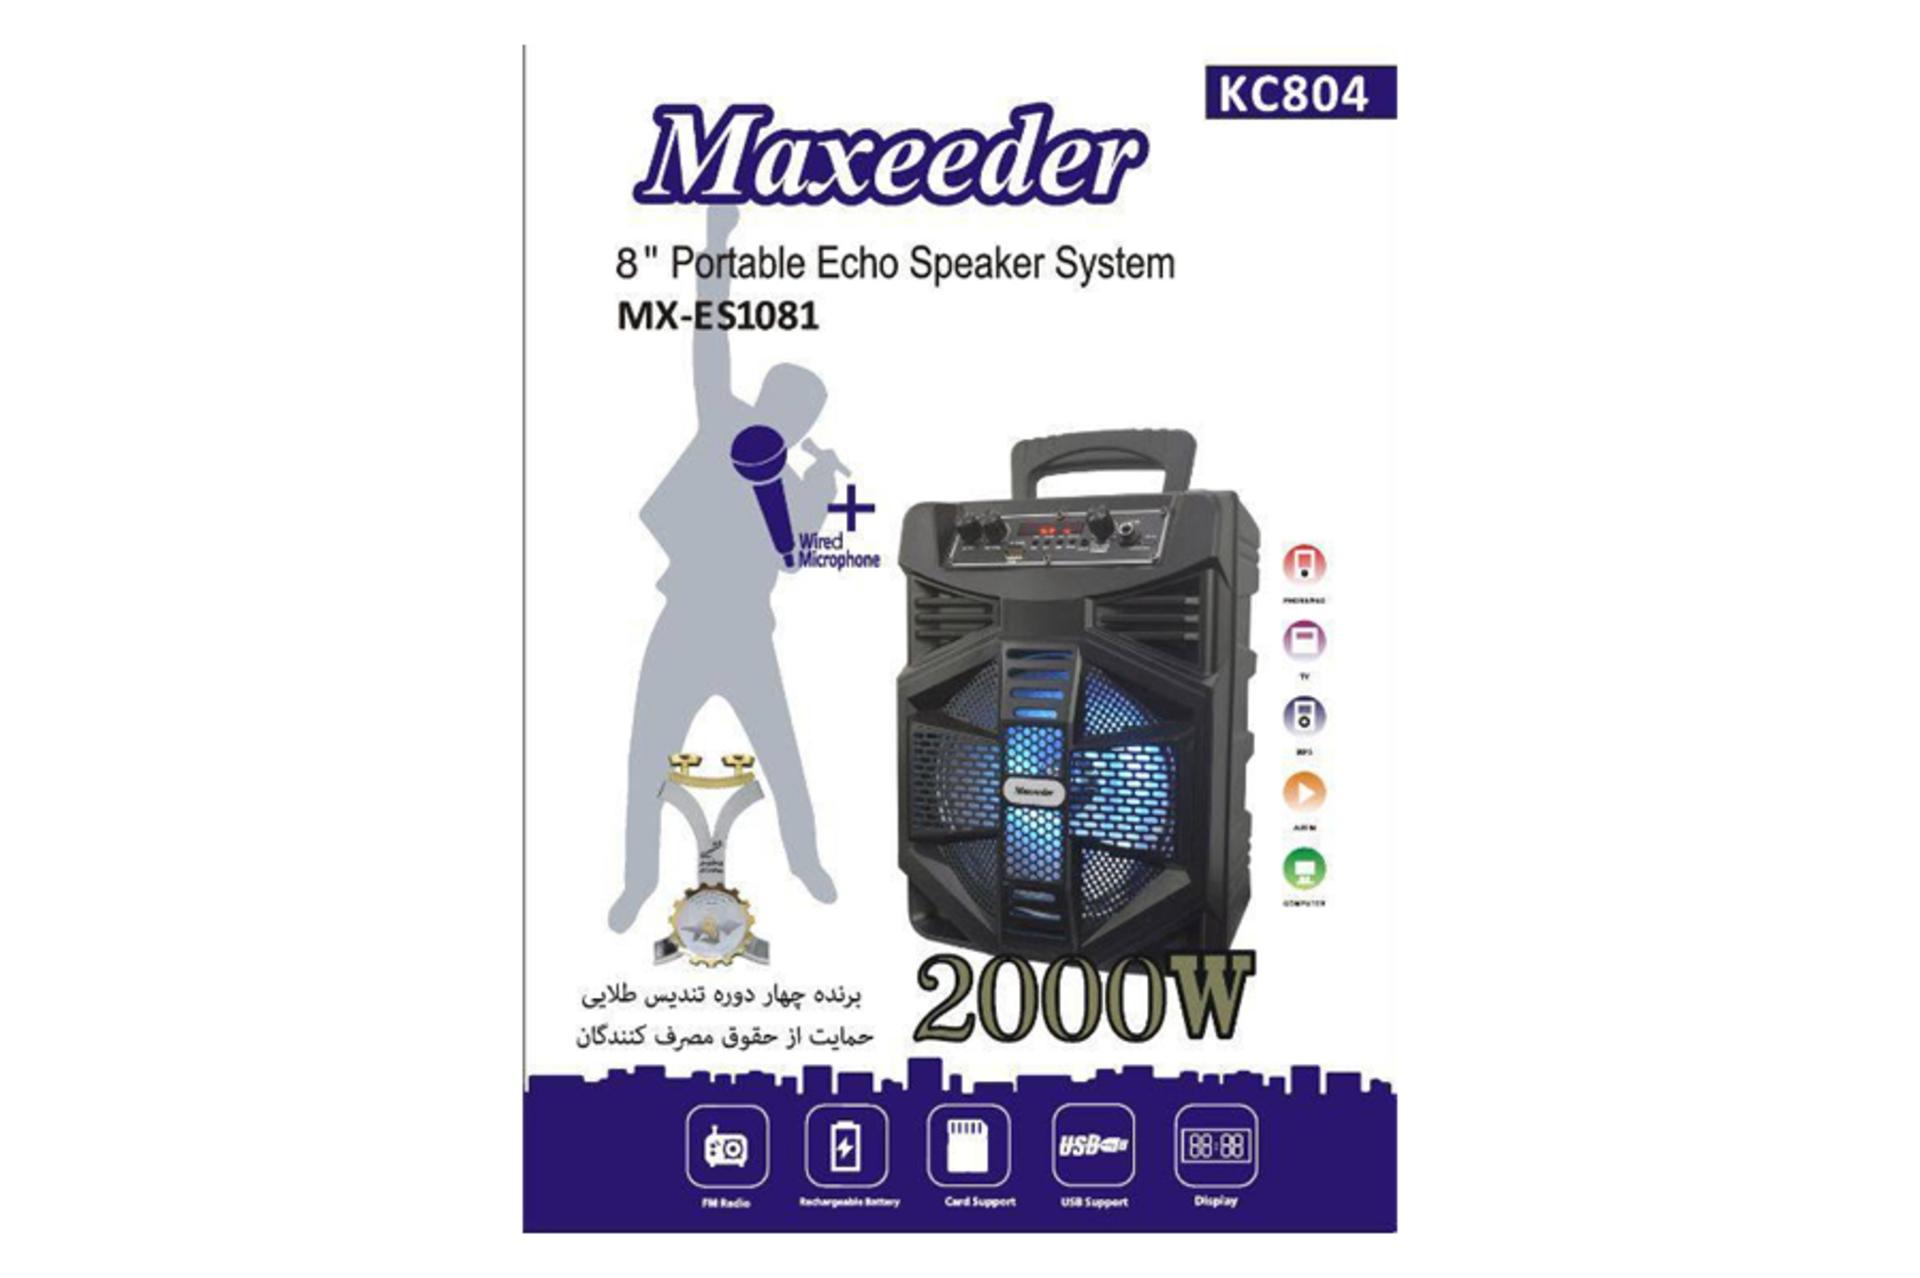 جعبه اسپیکر مکسیدر Maxeeder MX-ES1081 KC804